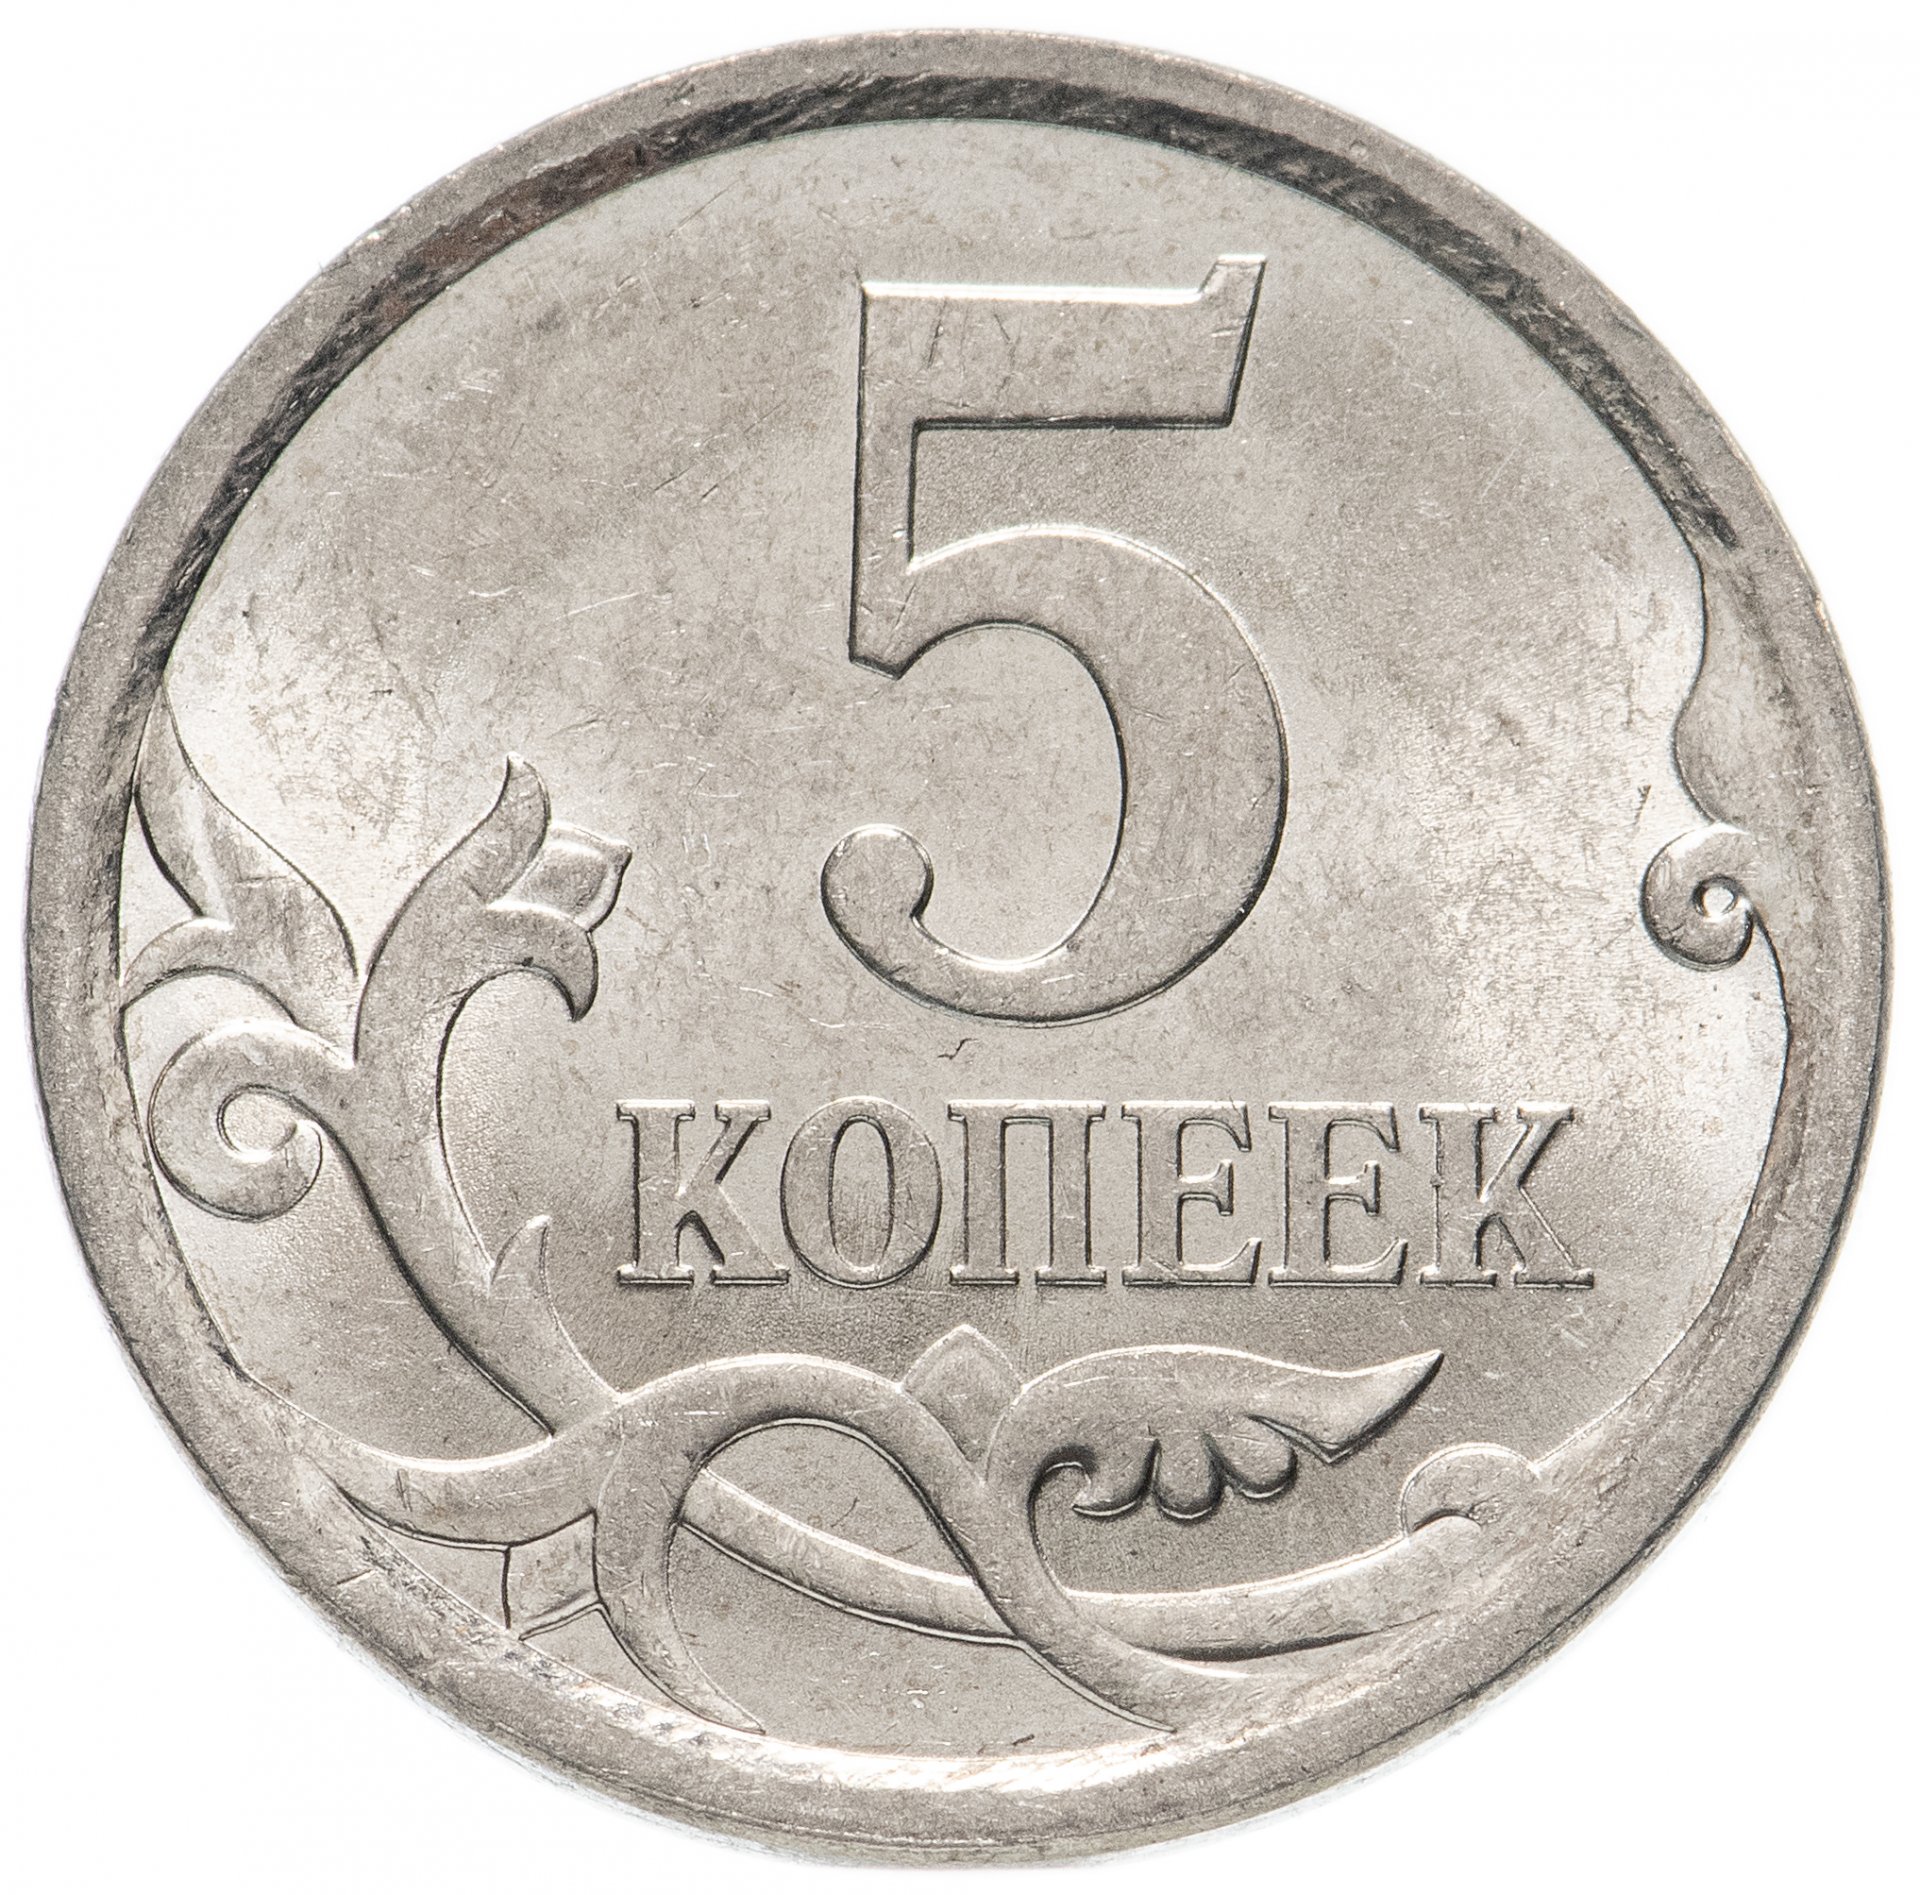 Количество монеты 5 рублей. Монета 5 копеек 2000 СП. Монеты 1 копейка 5 копеек 10 копеек 50 копеек. 5 Копеек Монетка 2008 год. 5 Копеек и 50 копеек.